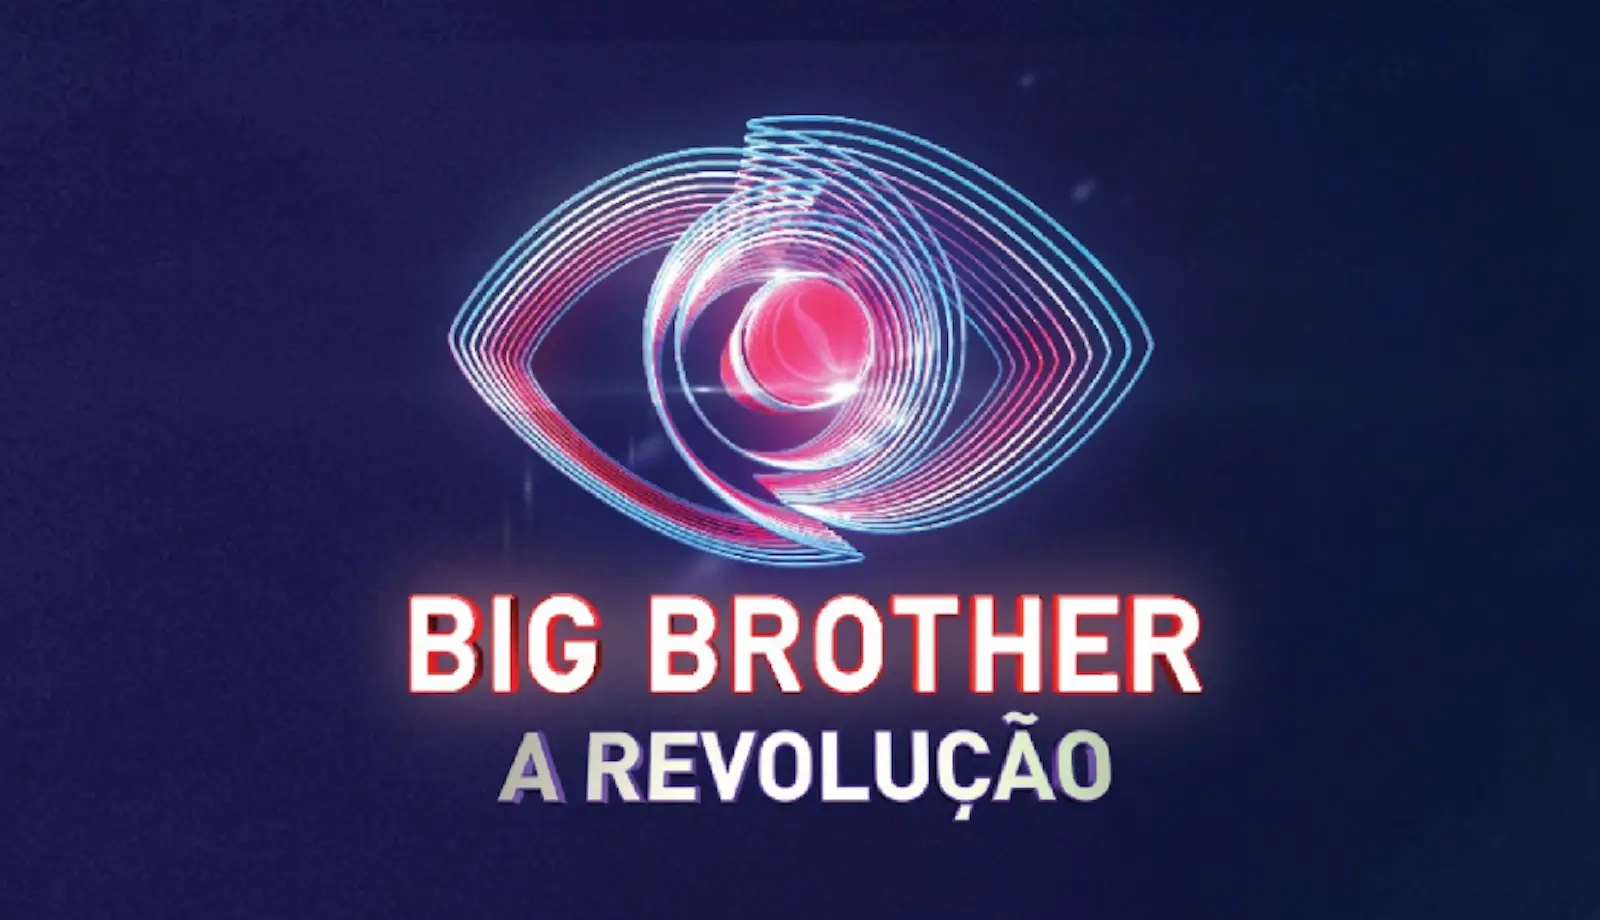 Big Brother A Revolucao